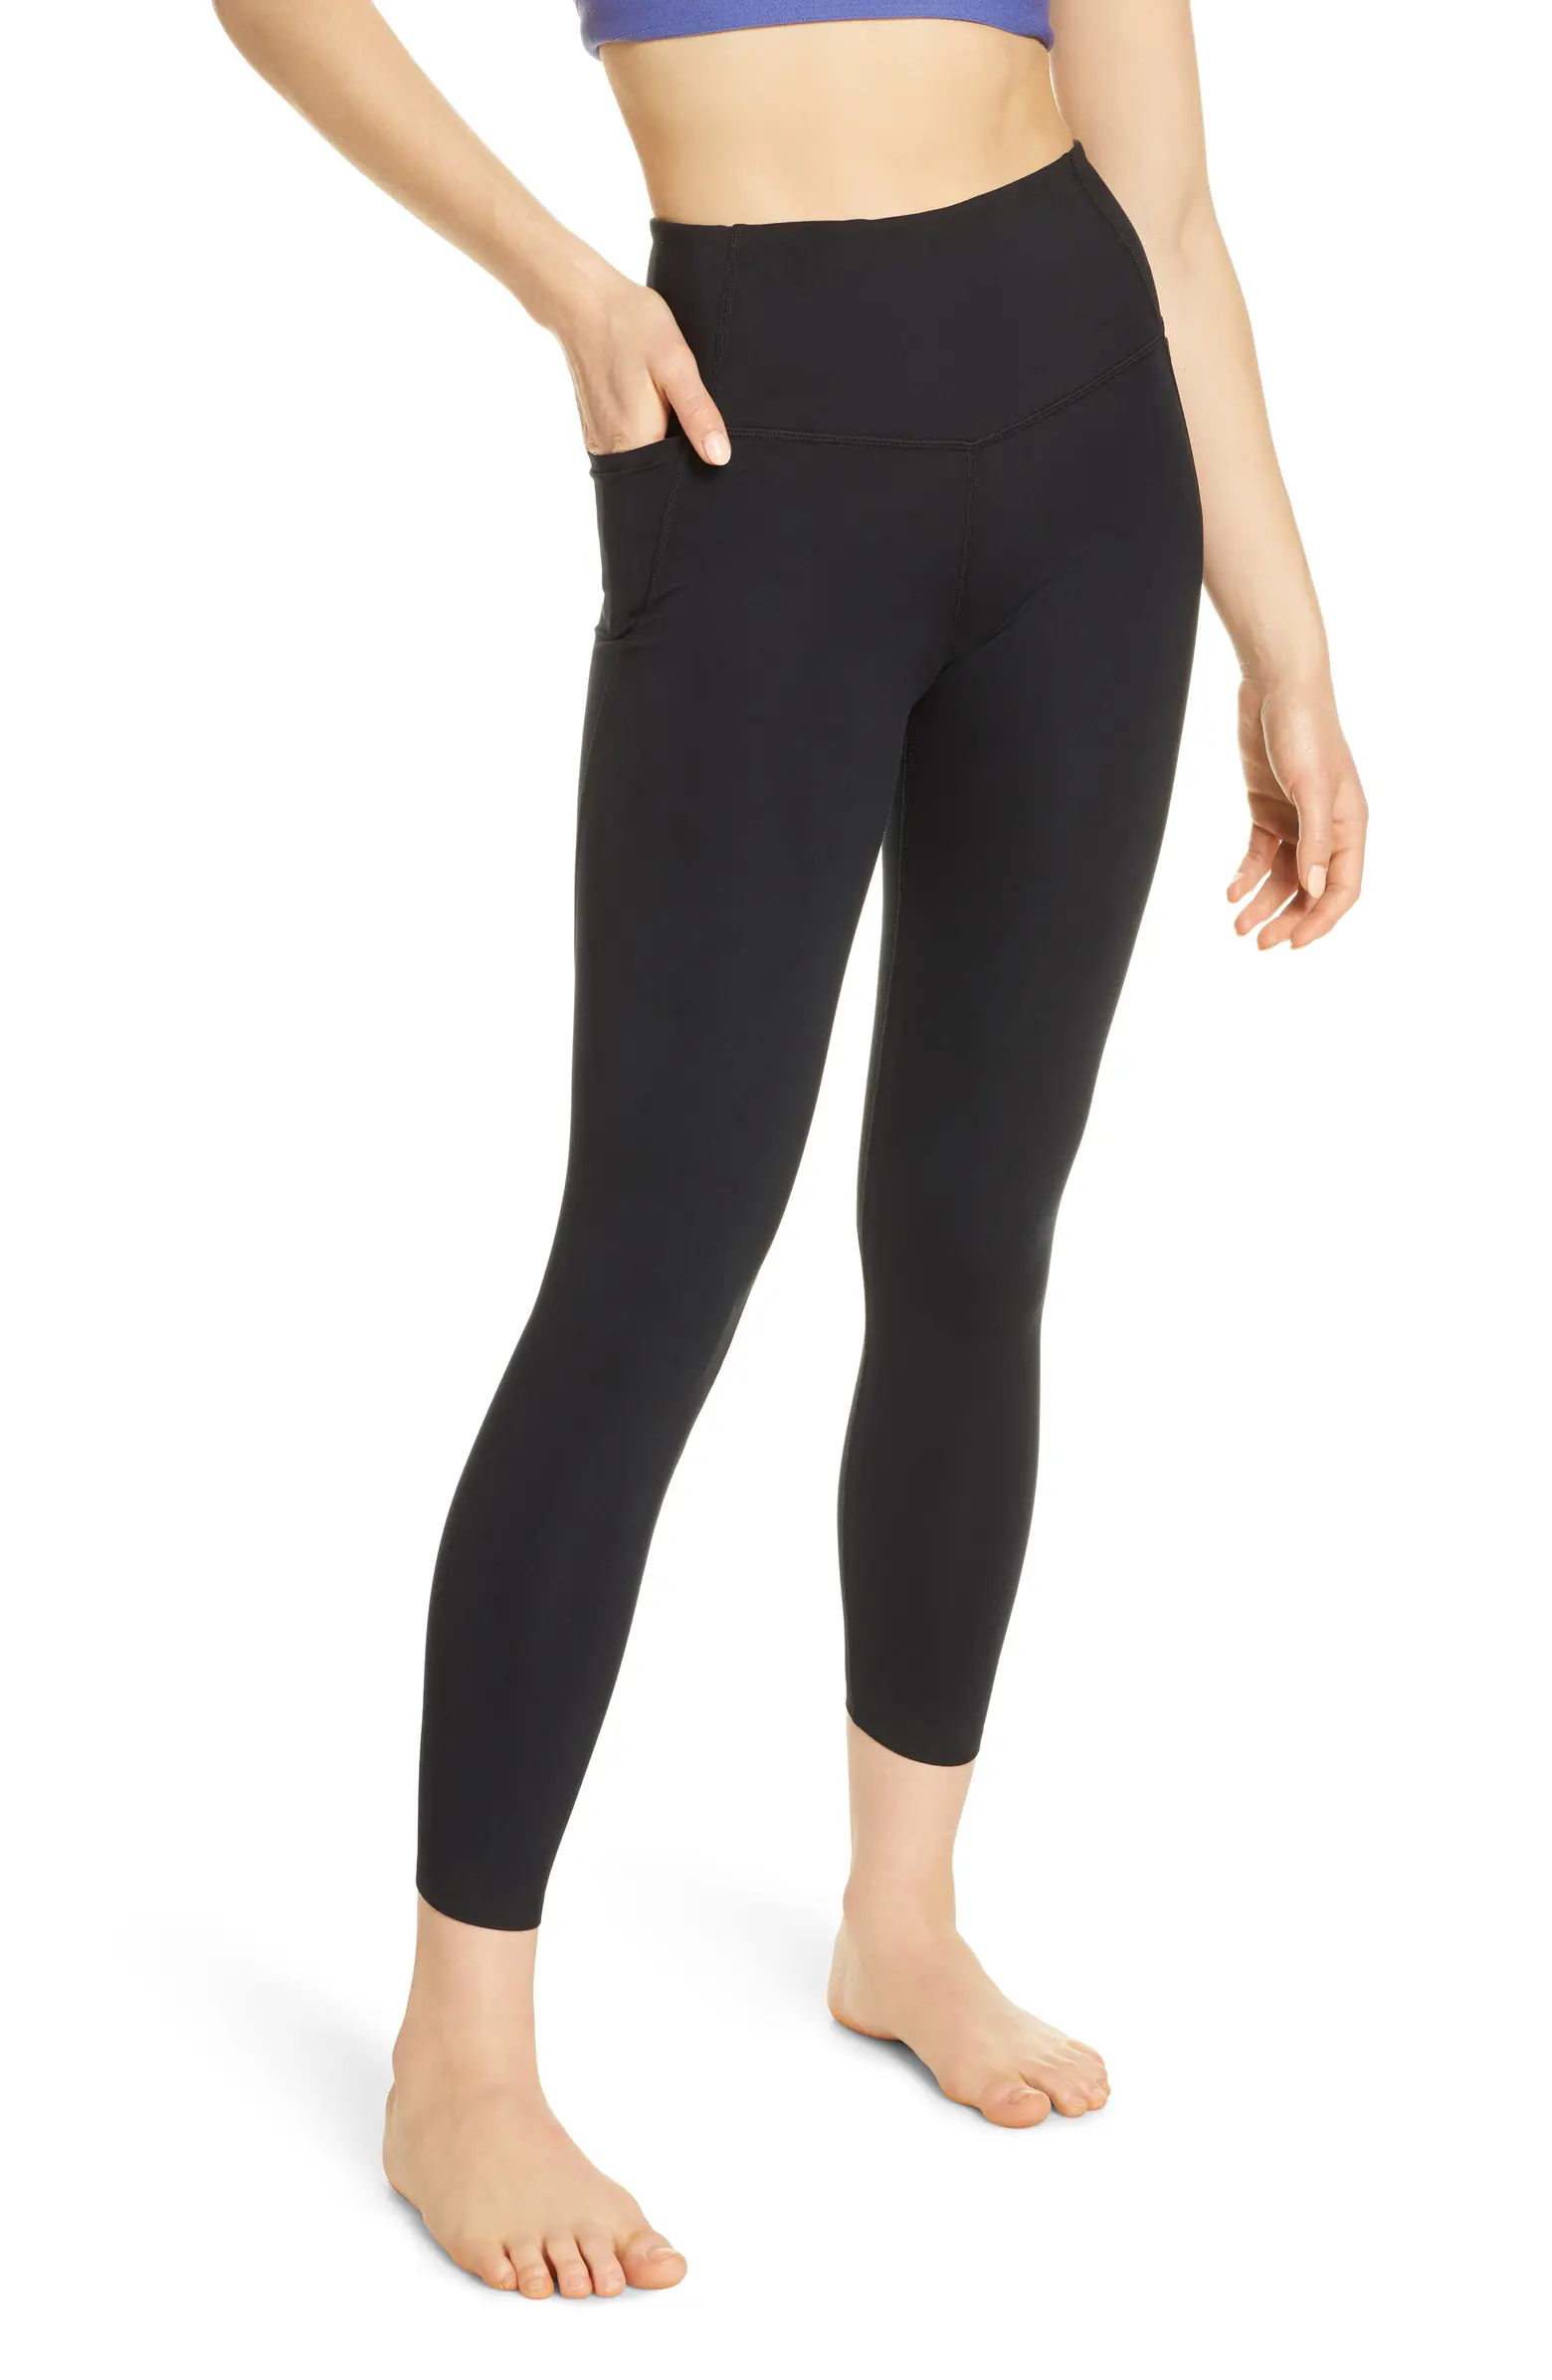 Bifashionco High Waist Yoga Pants workout or leisure Leggings with Pockets 